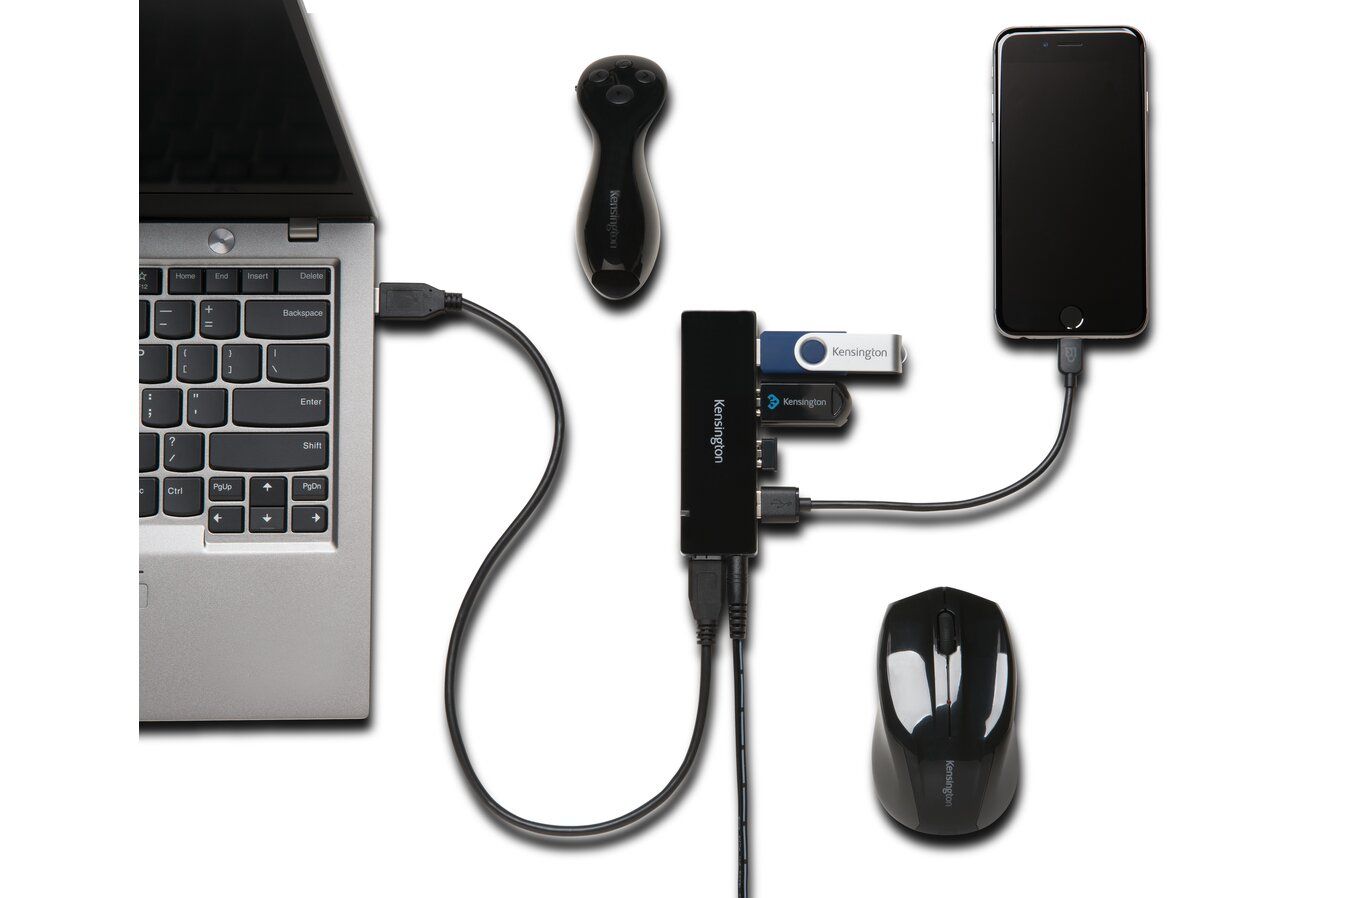 HUB extern KENSINGTON, porturi USB: USB 3.0 x 4, conectare prin USB 3.0, alimentare retea 220 V, cablu 0.3 m, negru, 